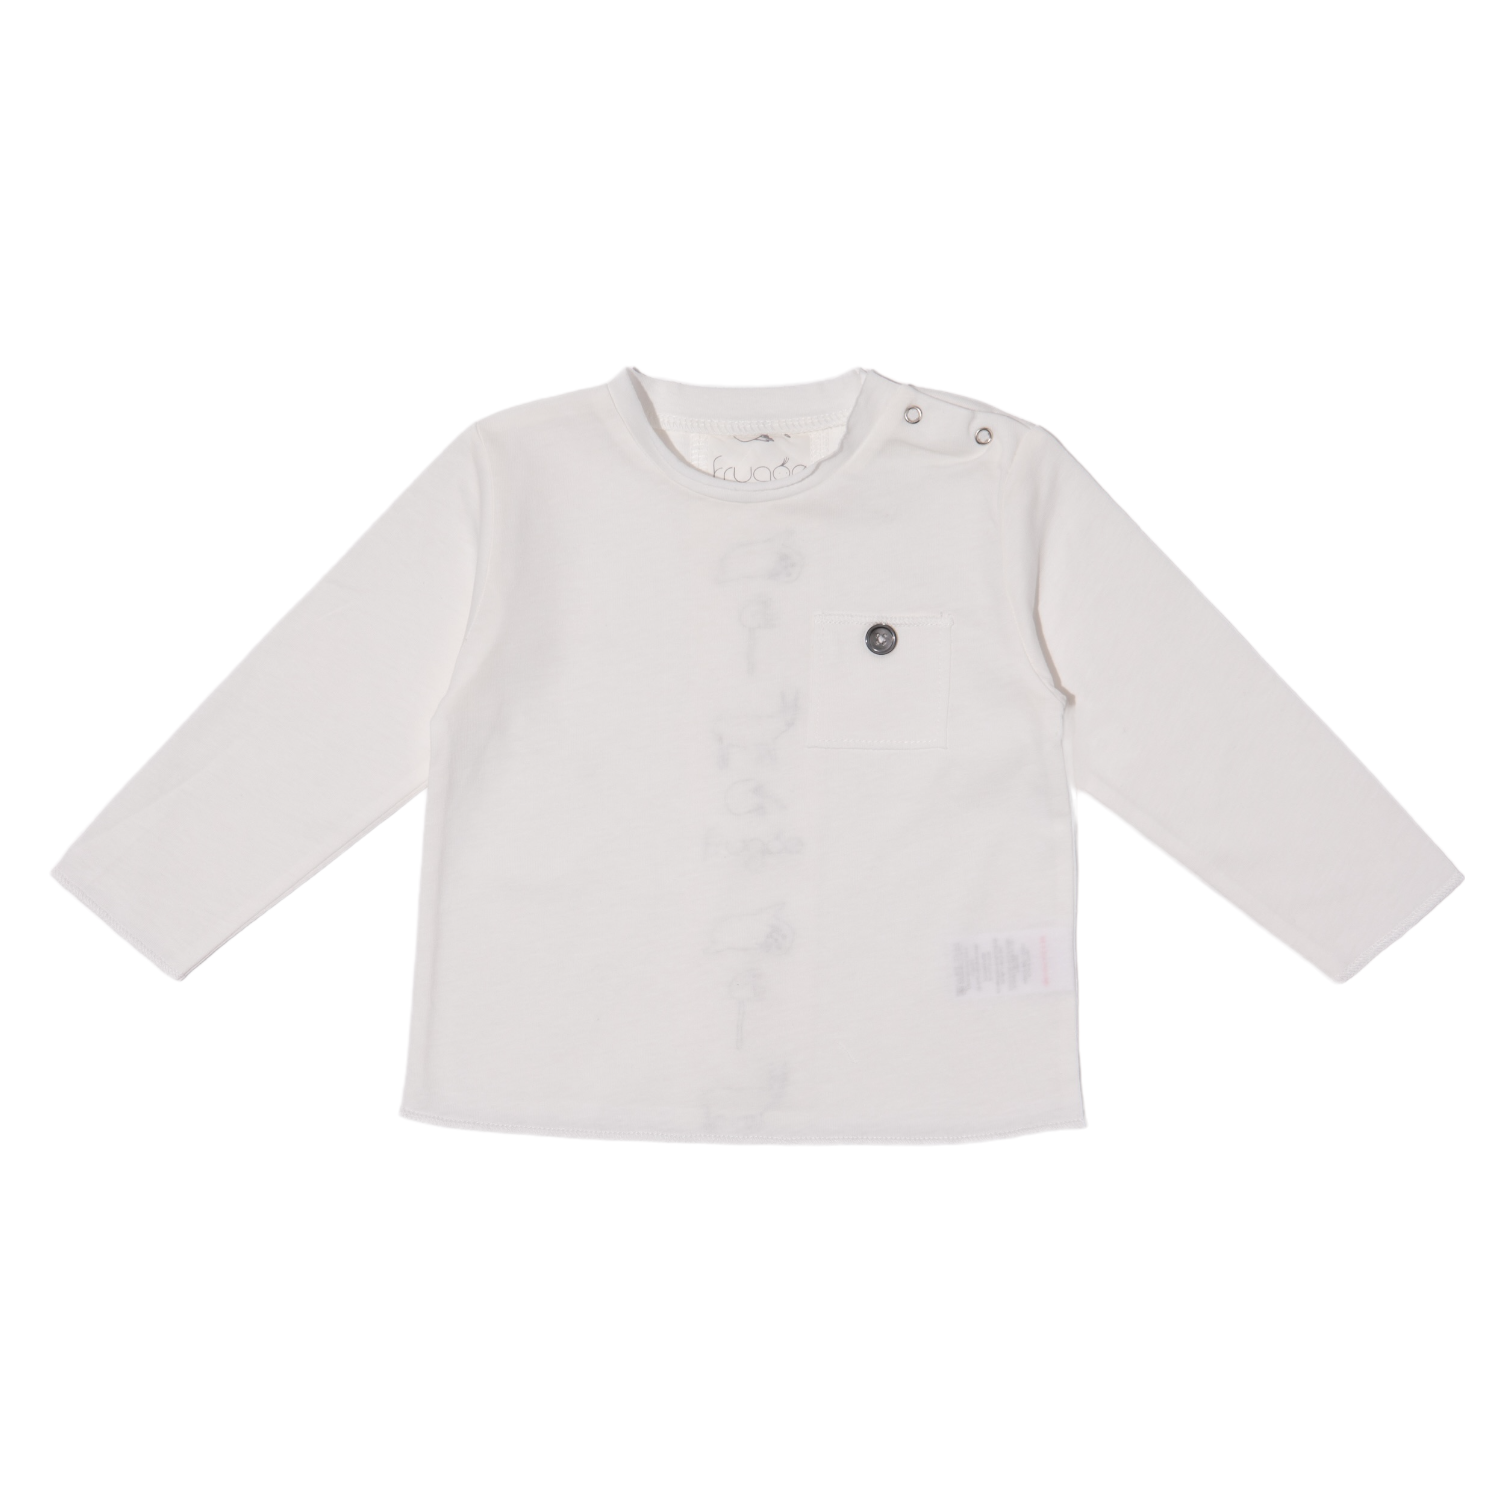 T-shirt bianca con taschino per neonati e bambini